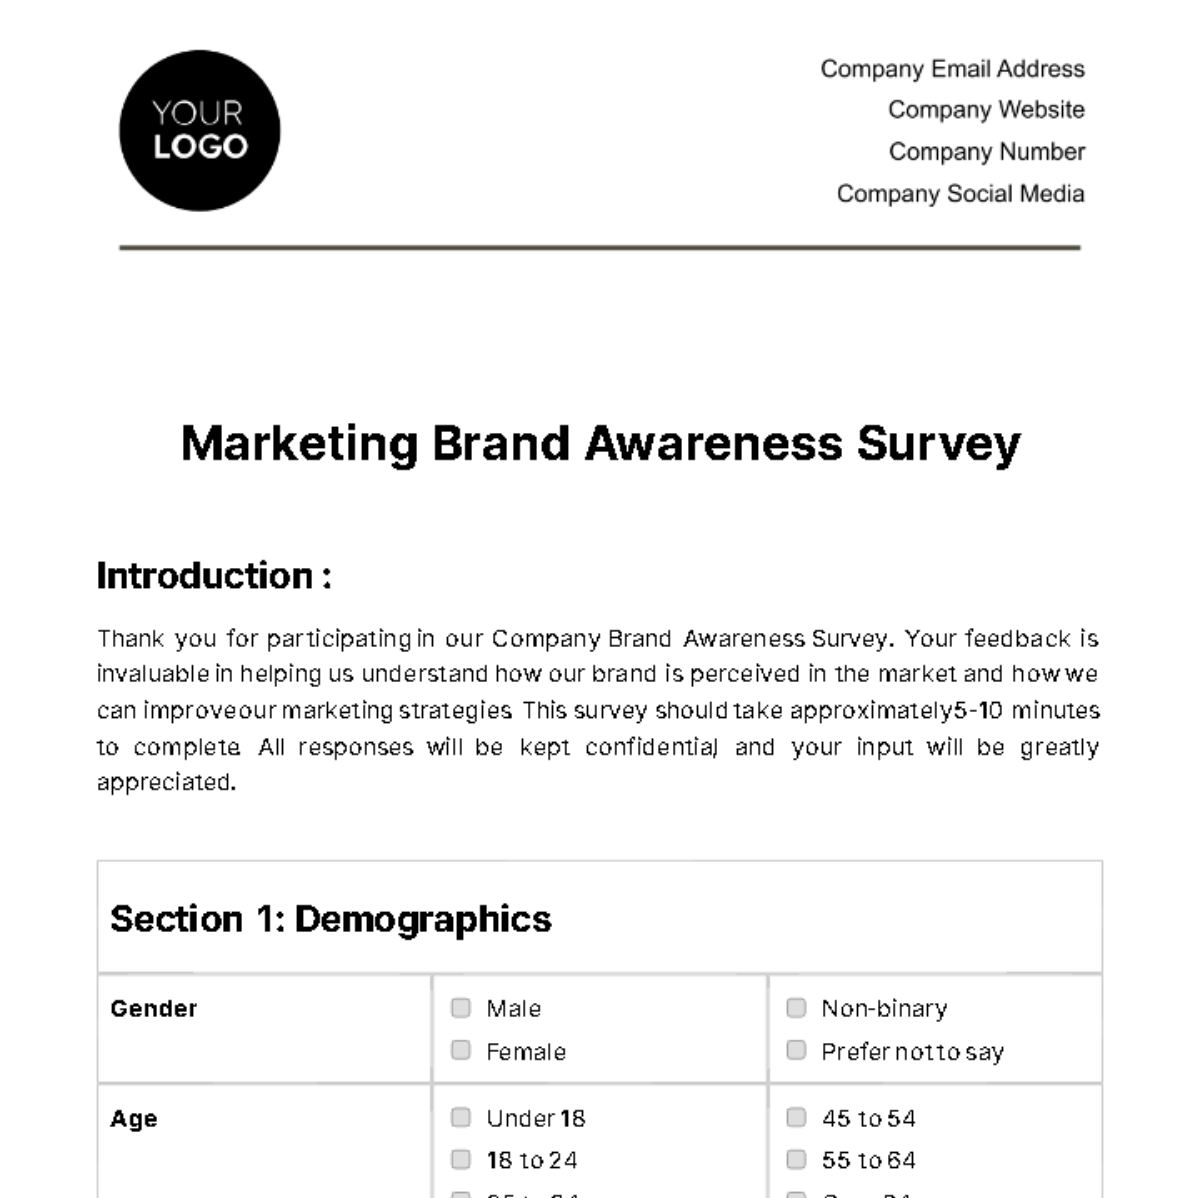 Marketing Brand Awareness Survey Template